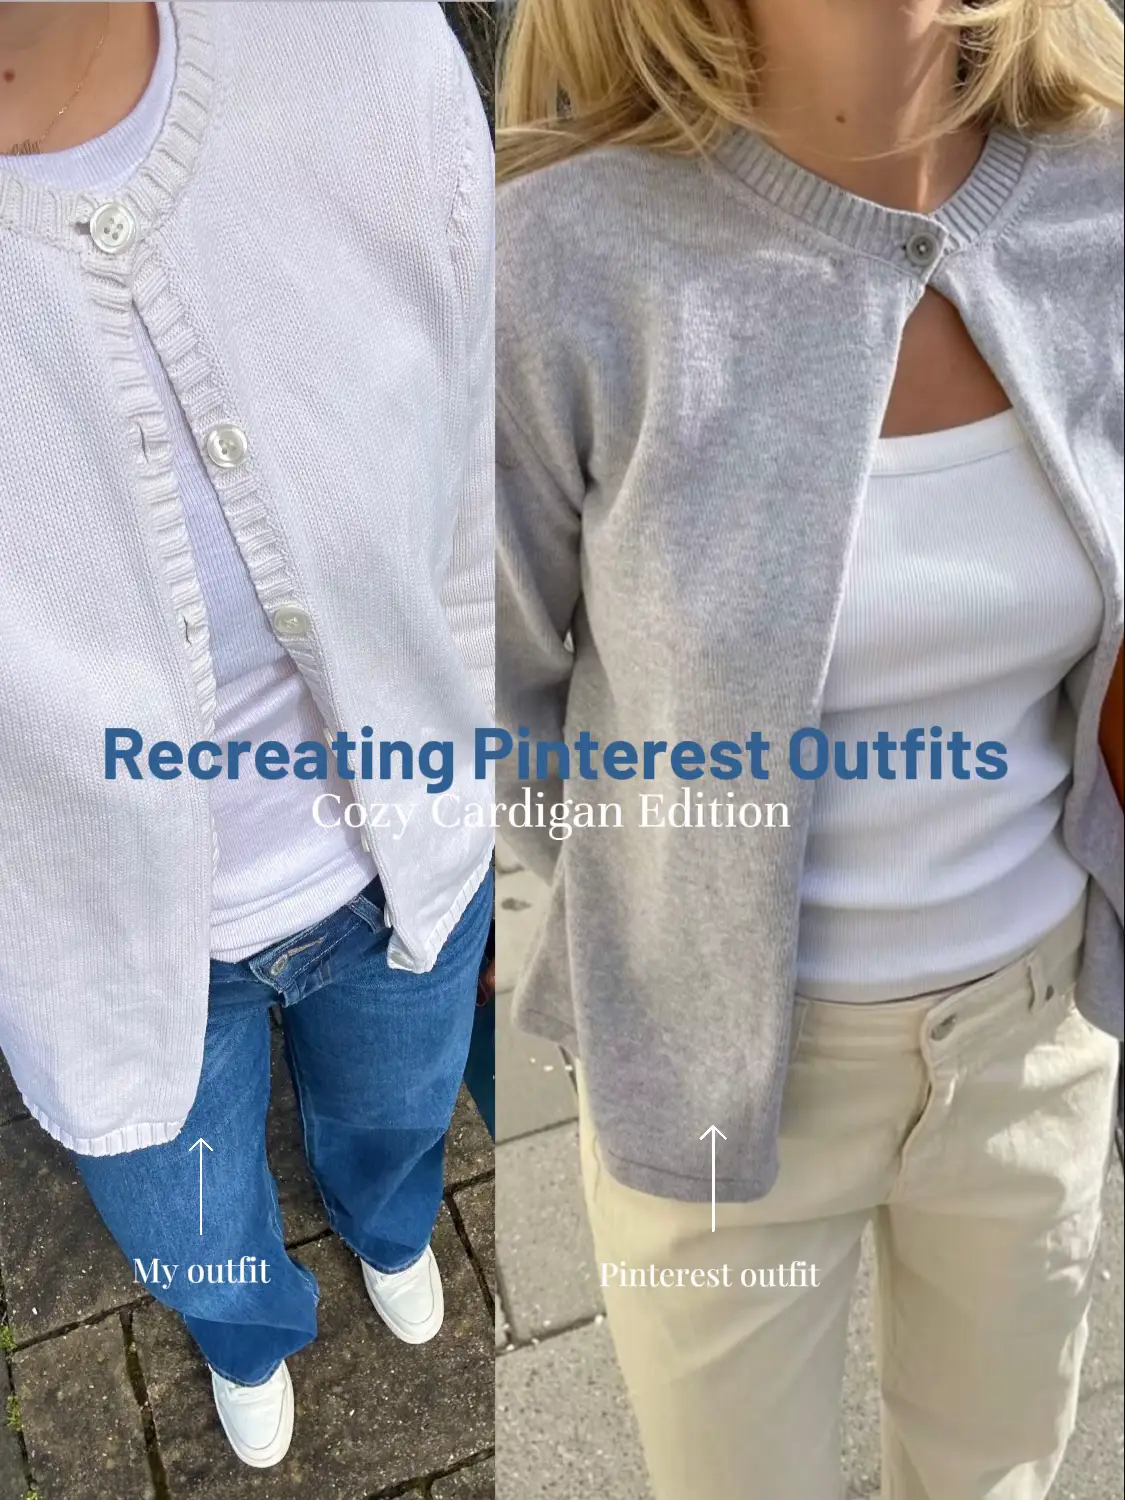 recreating pinterest outfits as a plus size gal💖 #pinterestoutfit #pi